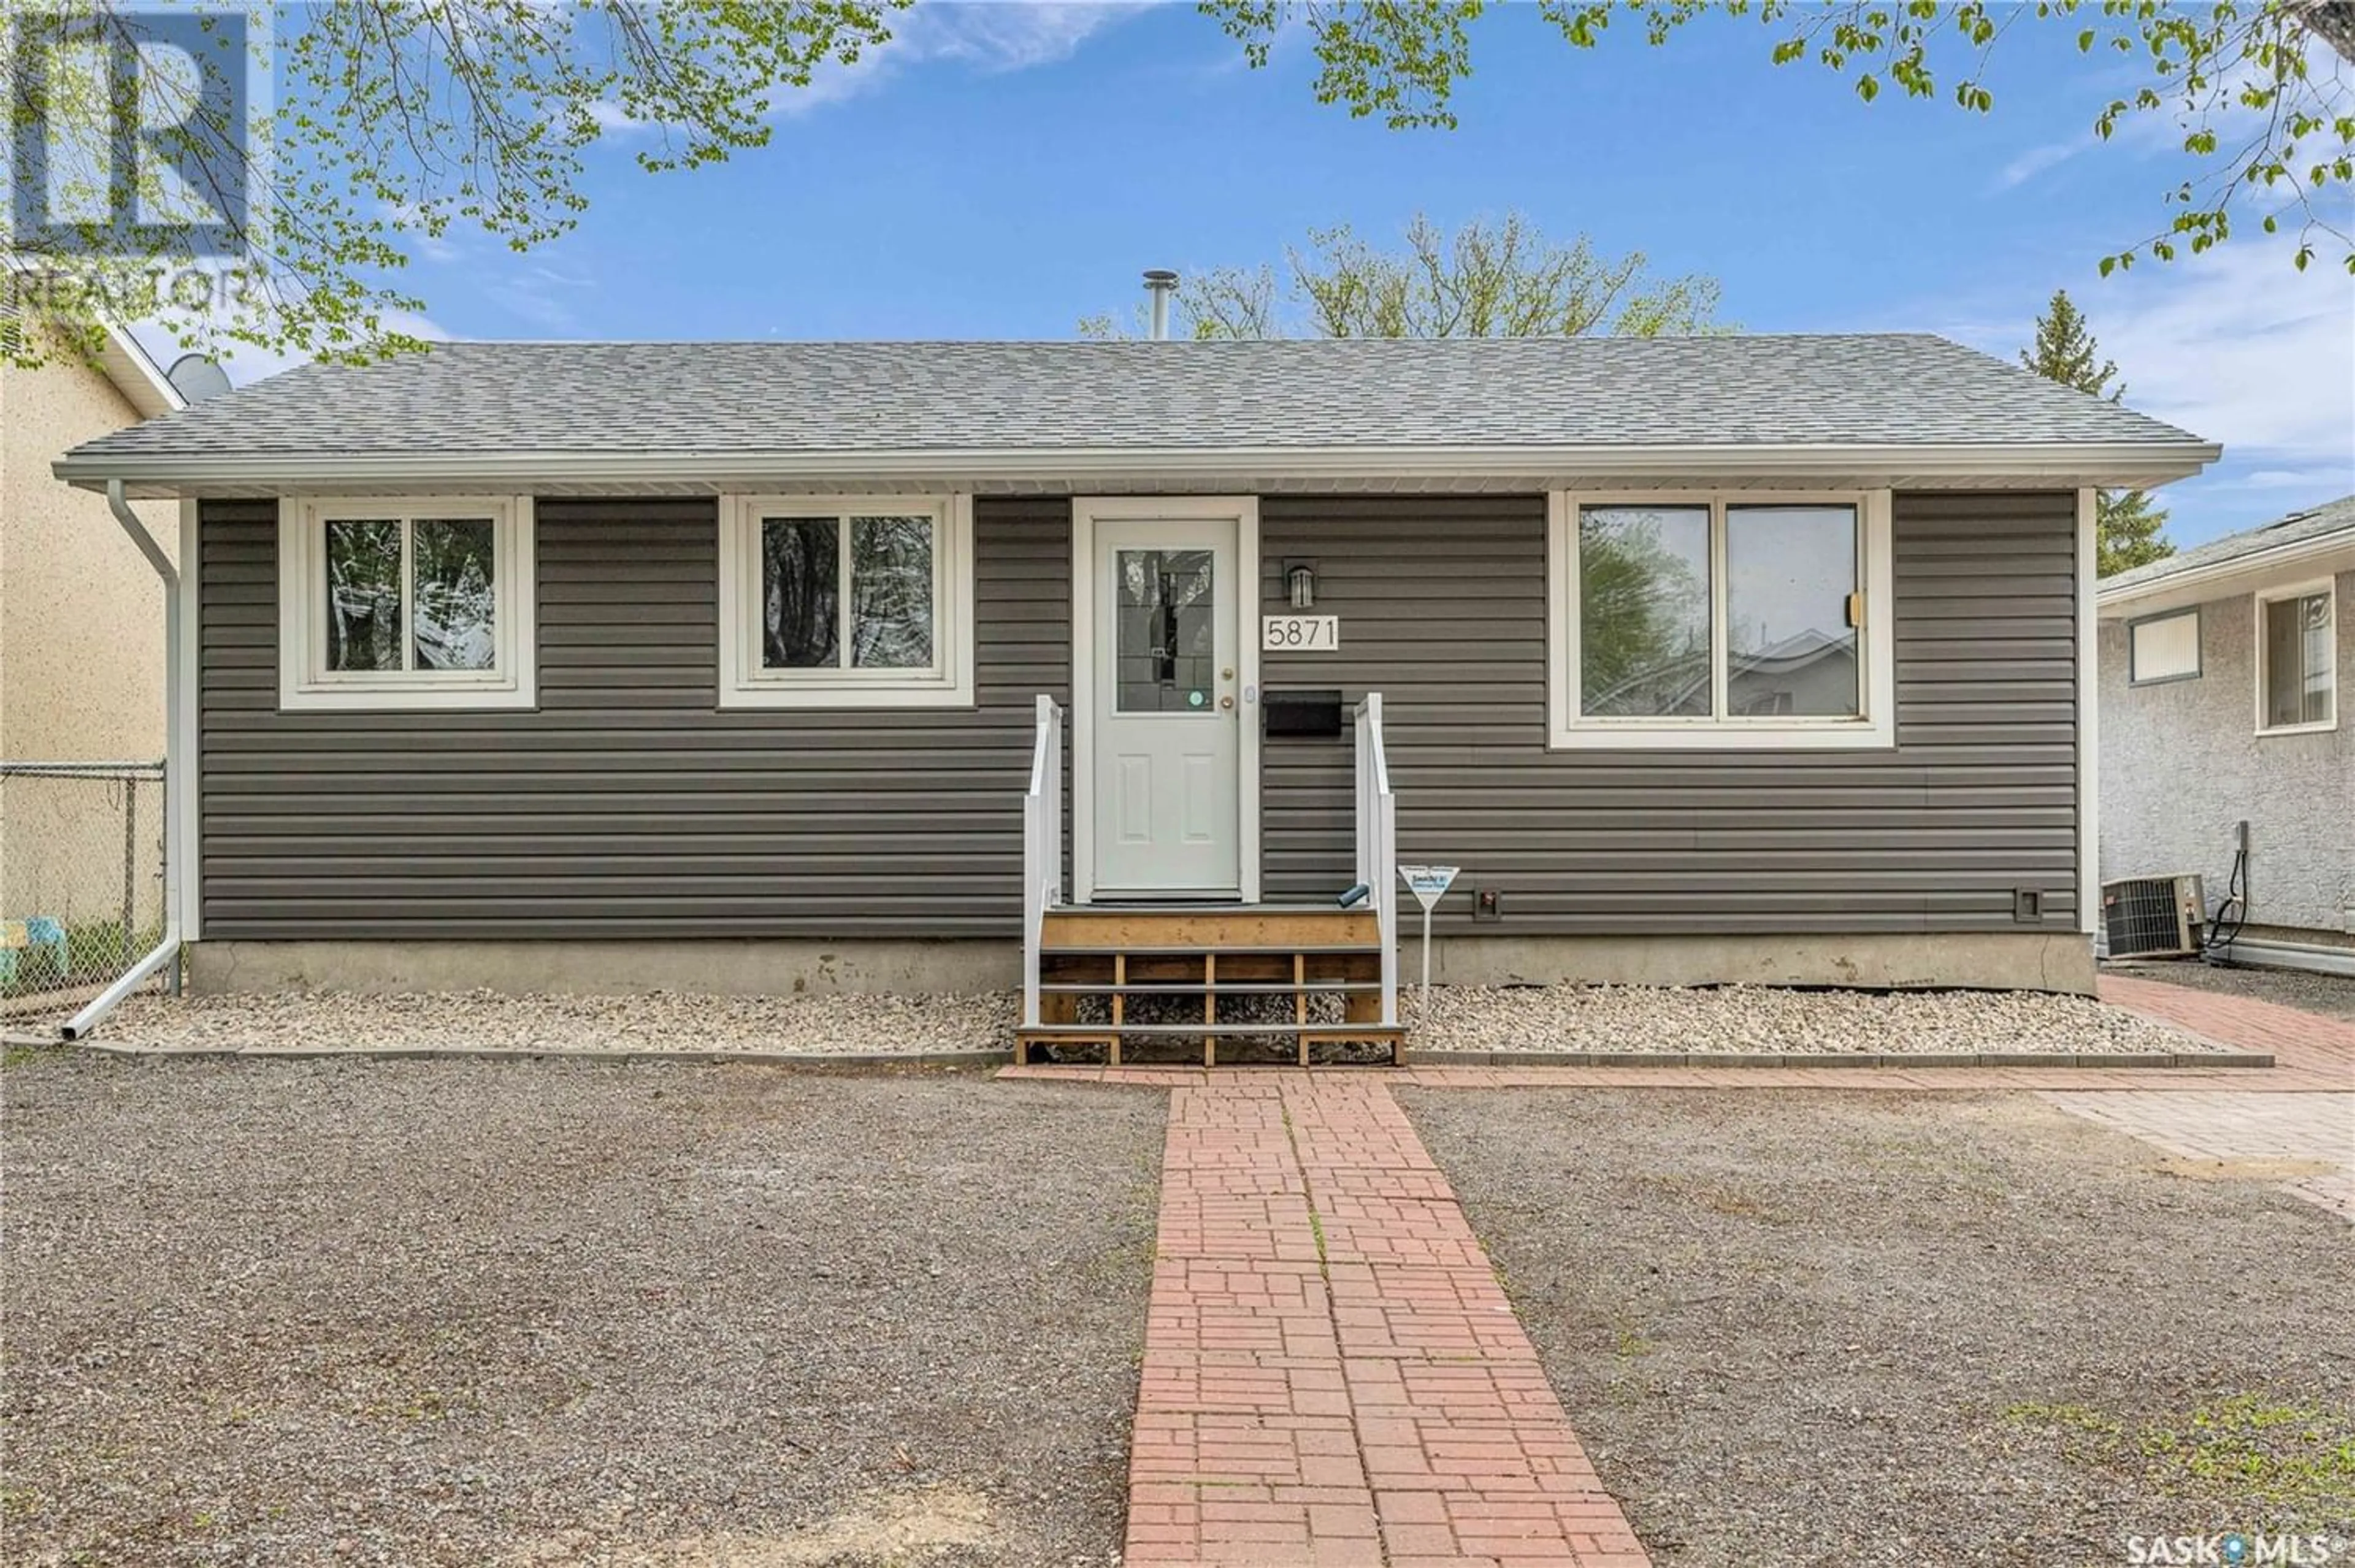 Home with vinyl exterior material for 5871 McKinley AVENUE, Regina Saskatchewan S4T6P4